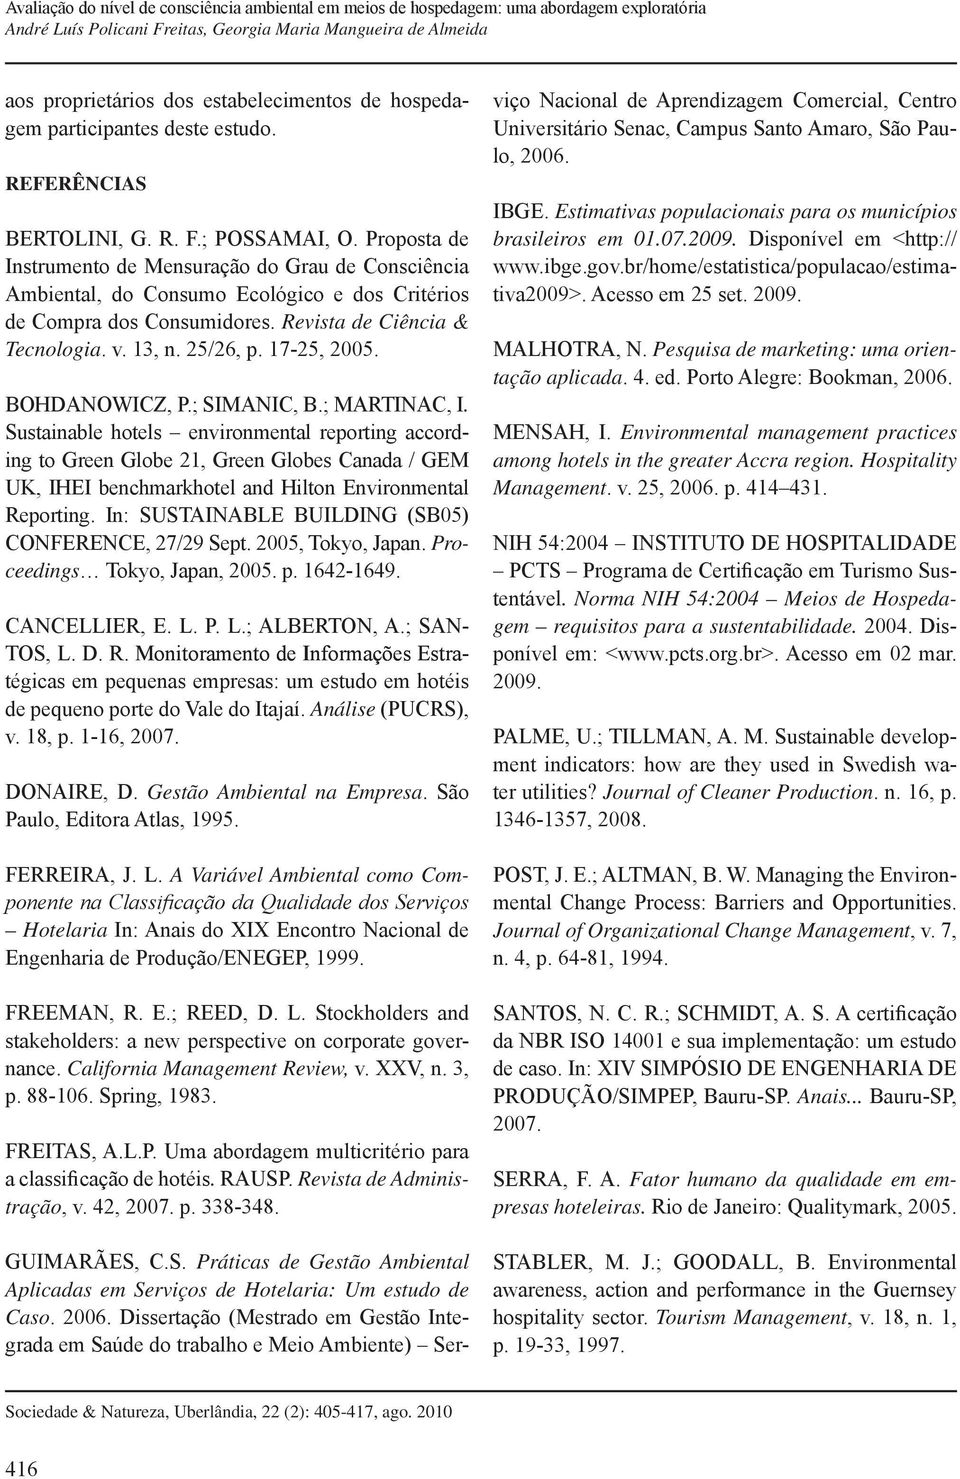 17-25, 2005. BOHDANOWICZ, P.; SIMANIC, B.; MARTINAC, I.